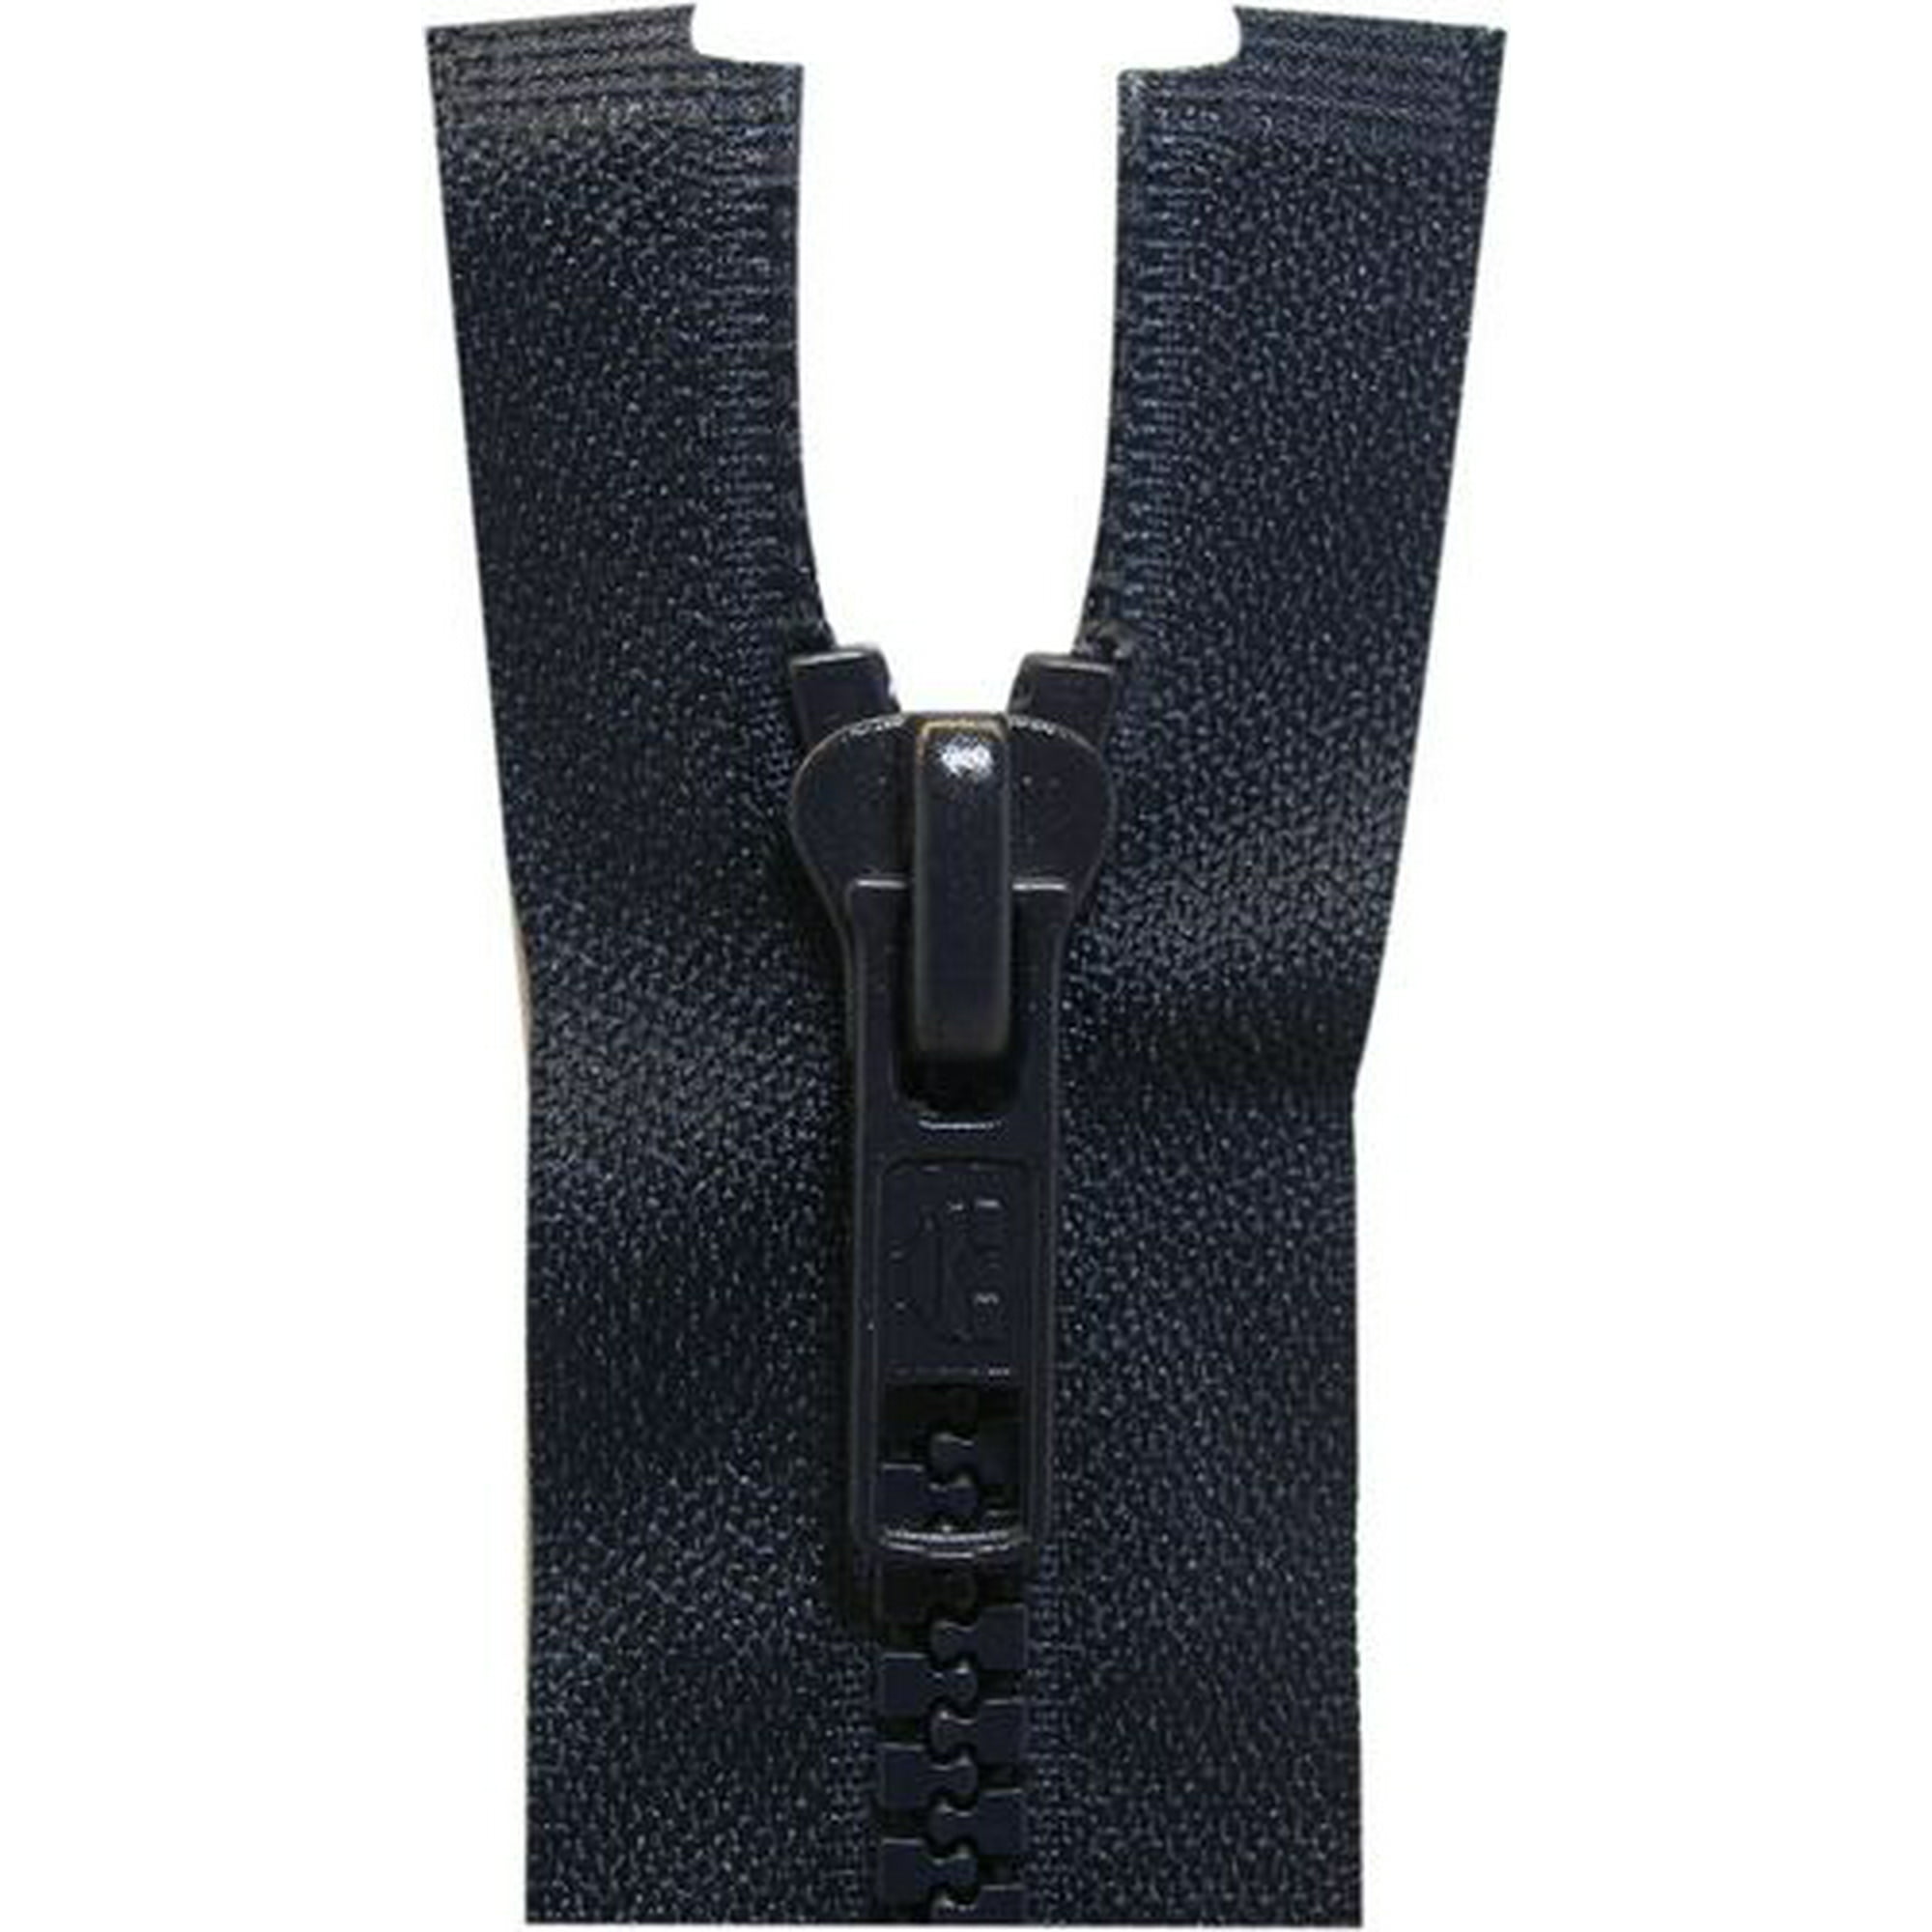 Zipper and Button Ind. Ltd. - G.M Marketing & Sales - Zipper